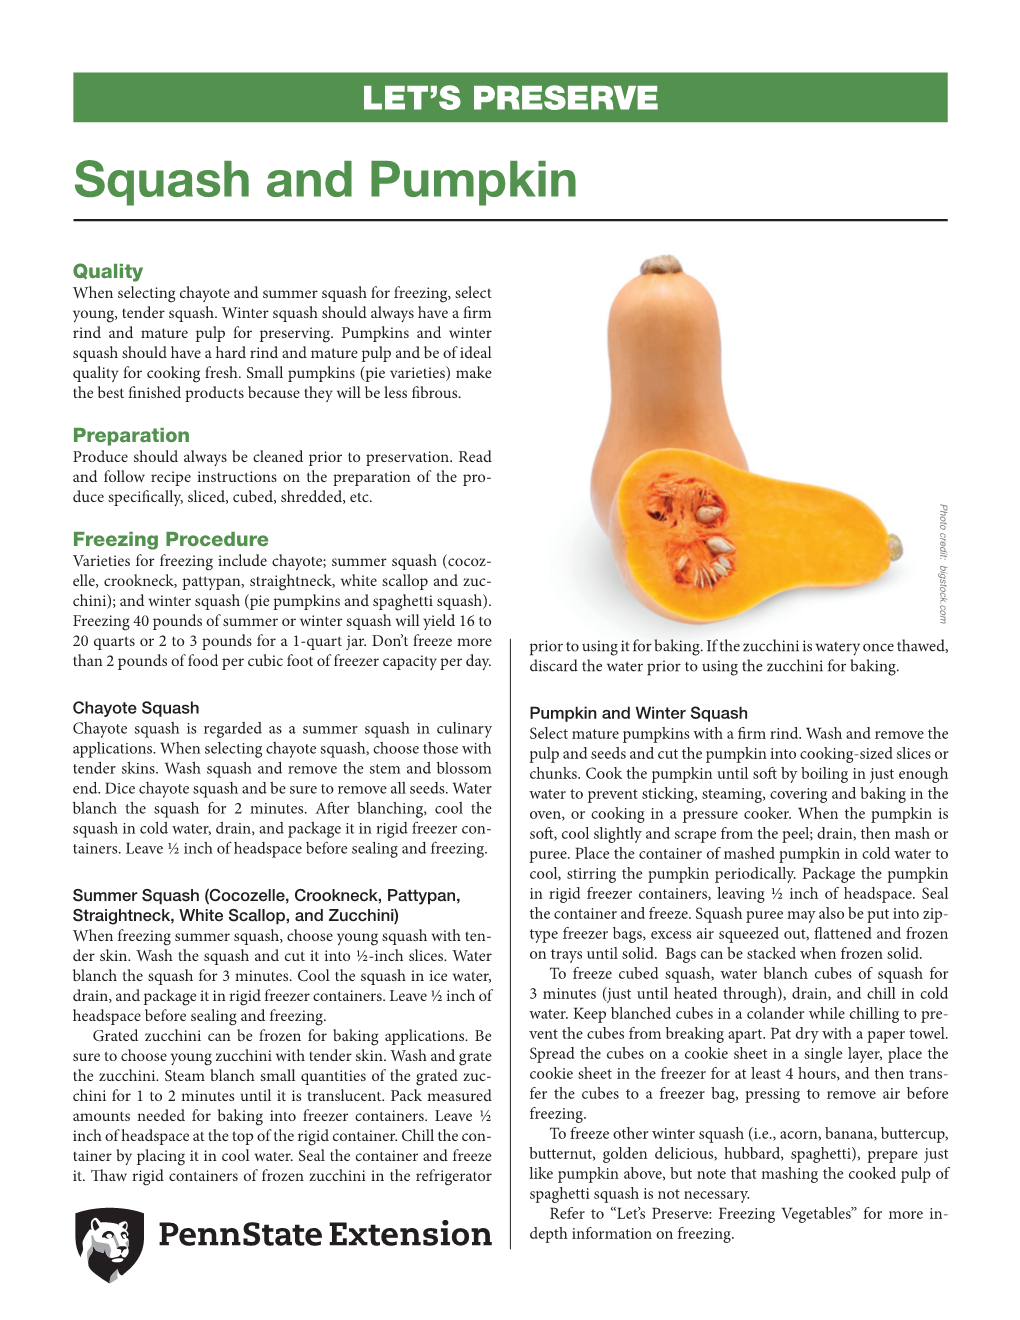 Squash and Pumpkin